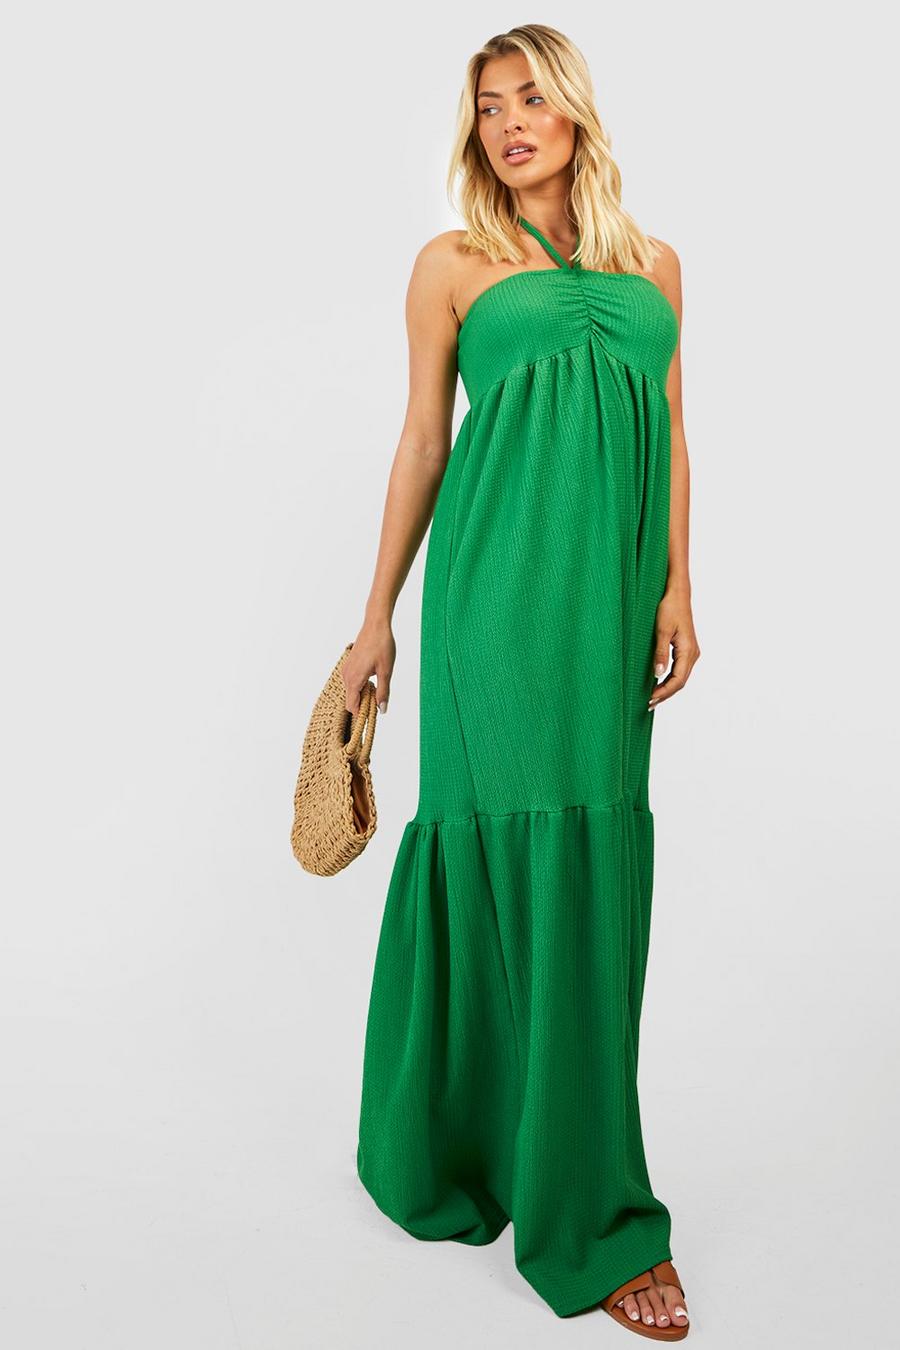 Lime green Halter Textured Maxi Dress